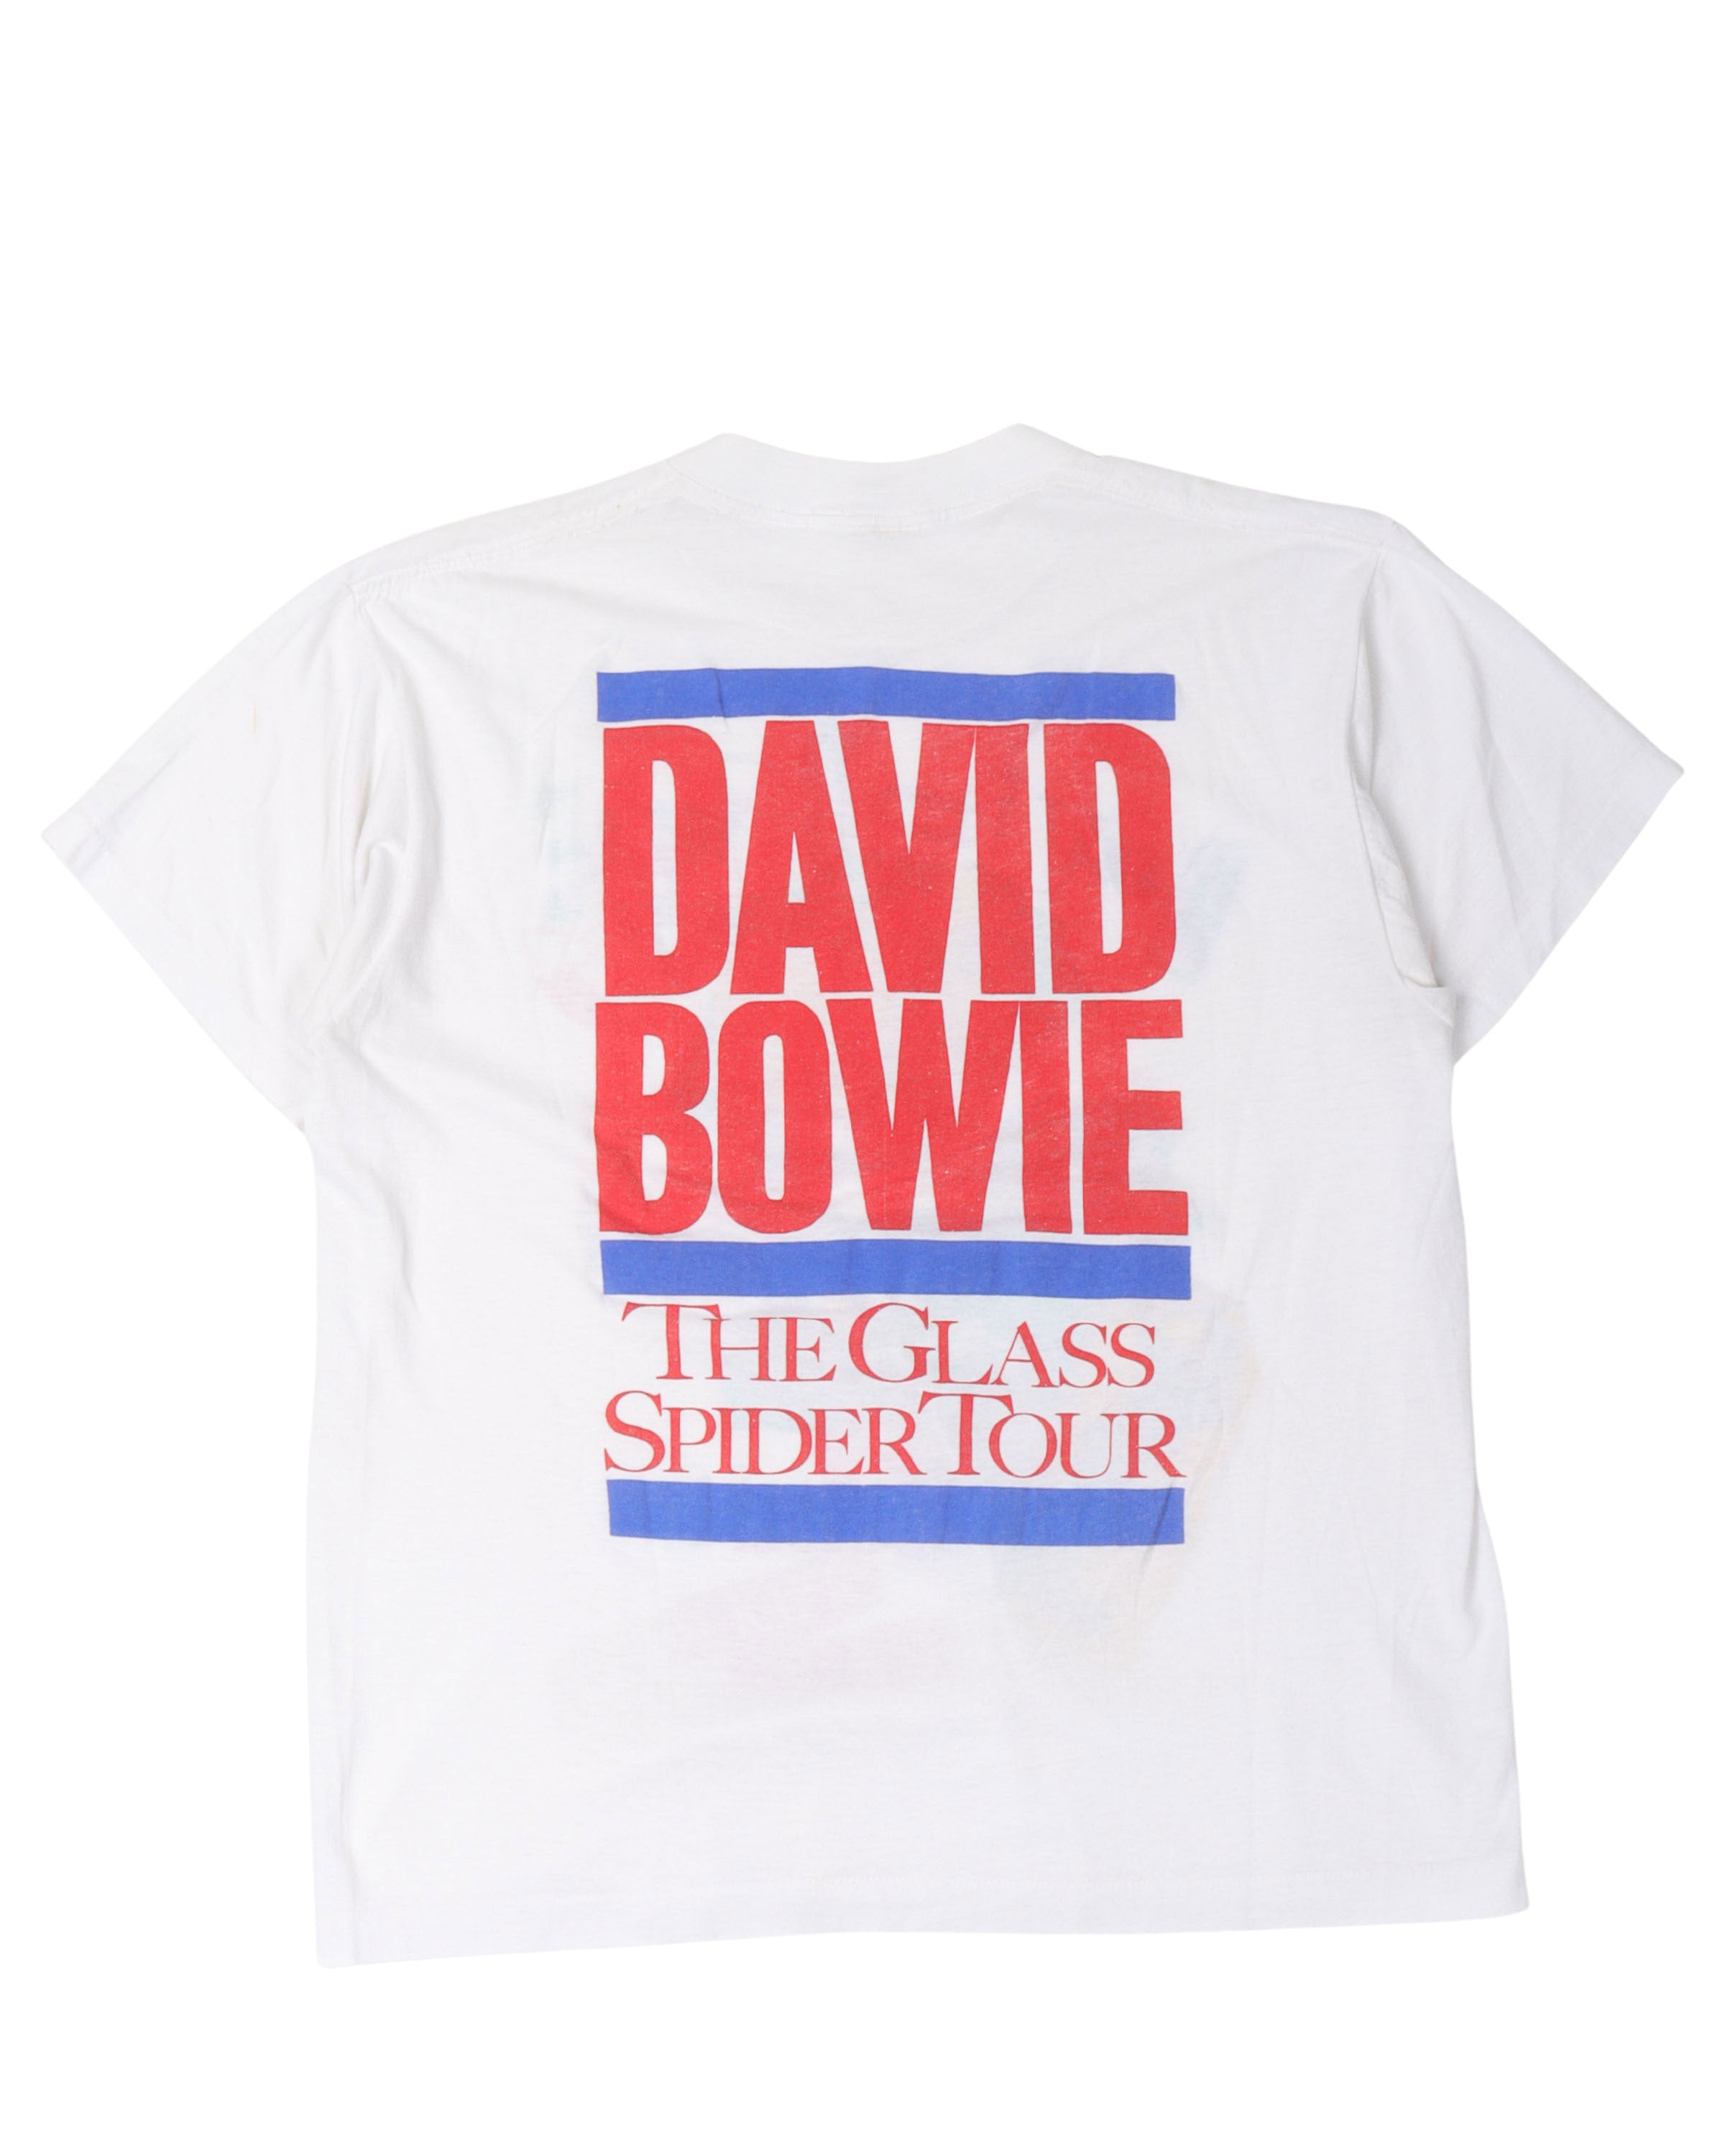 David Bowie The Glass Spider Tour T-Shirt